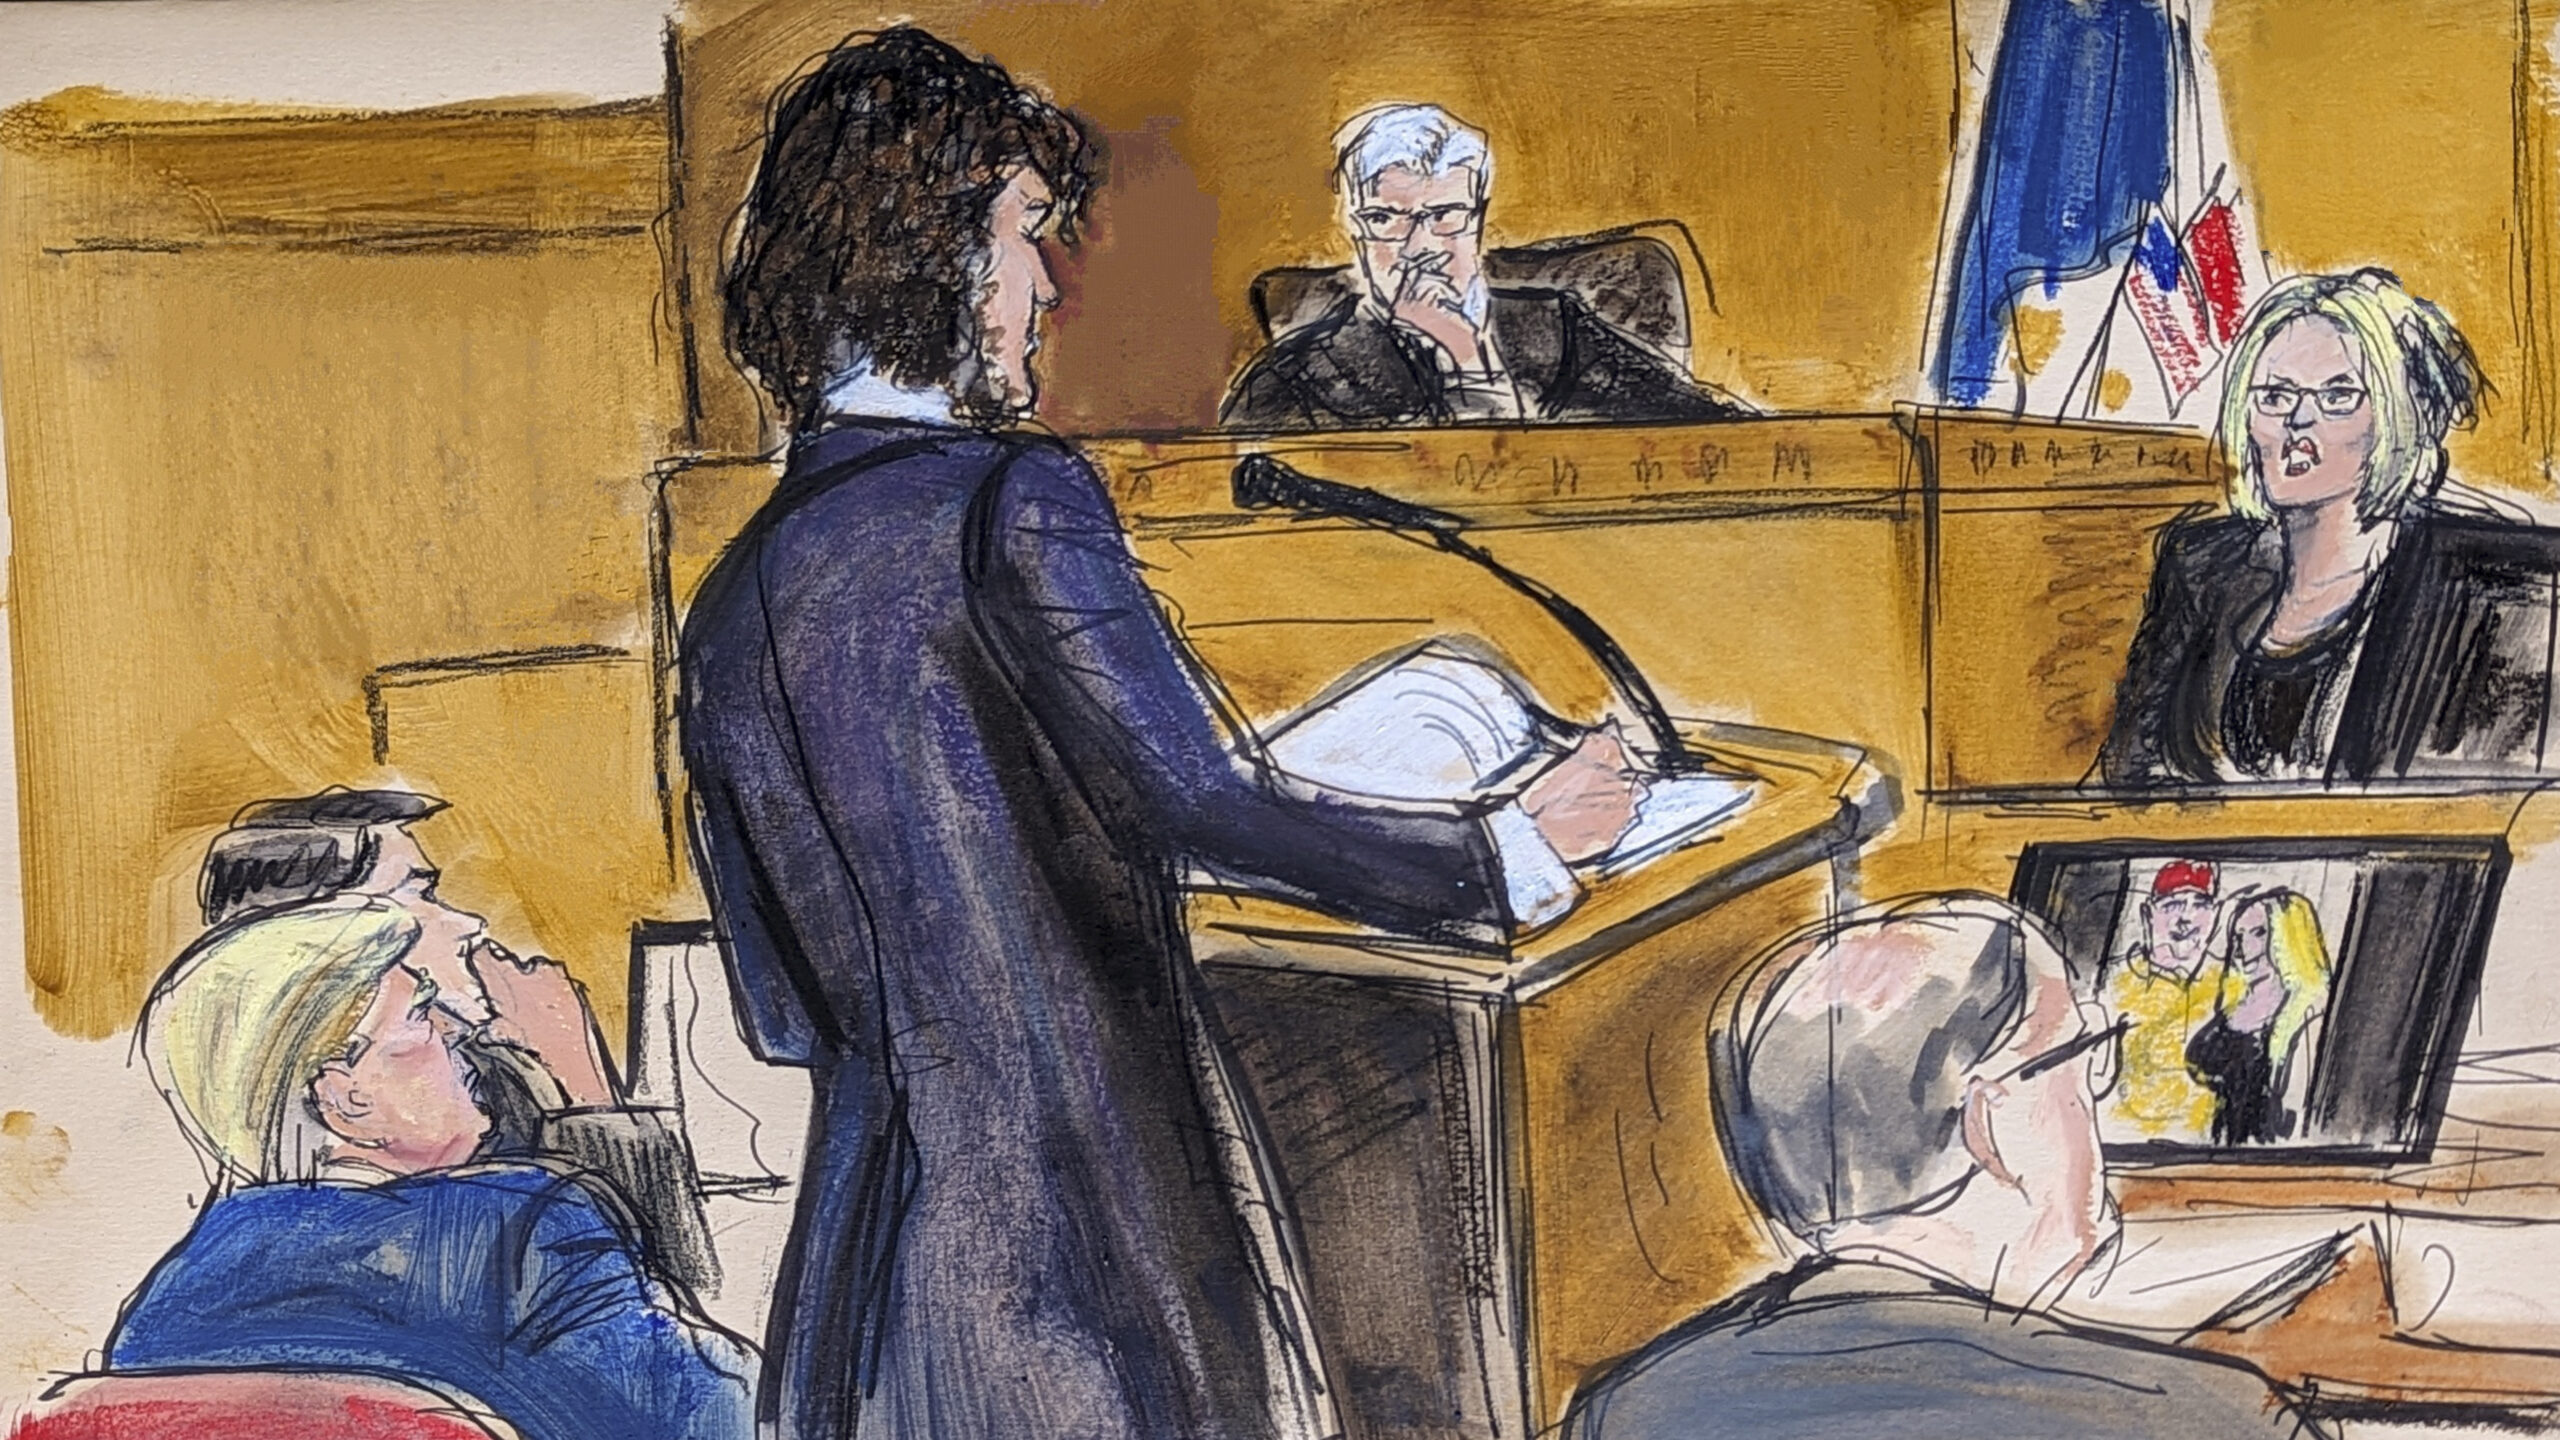 Adult film star Stormy Daniels testifies against Trump in New York trial